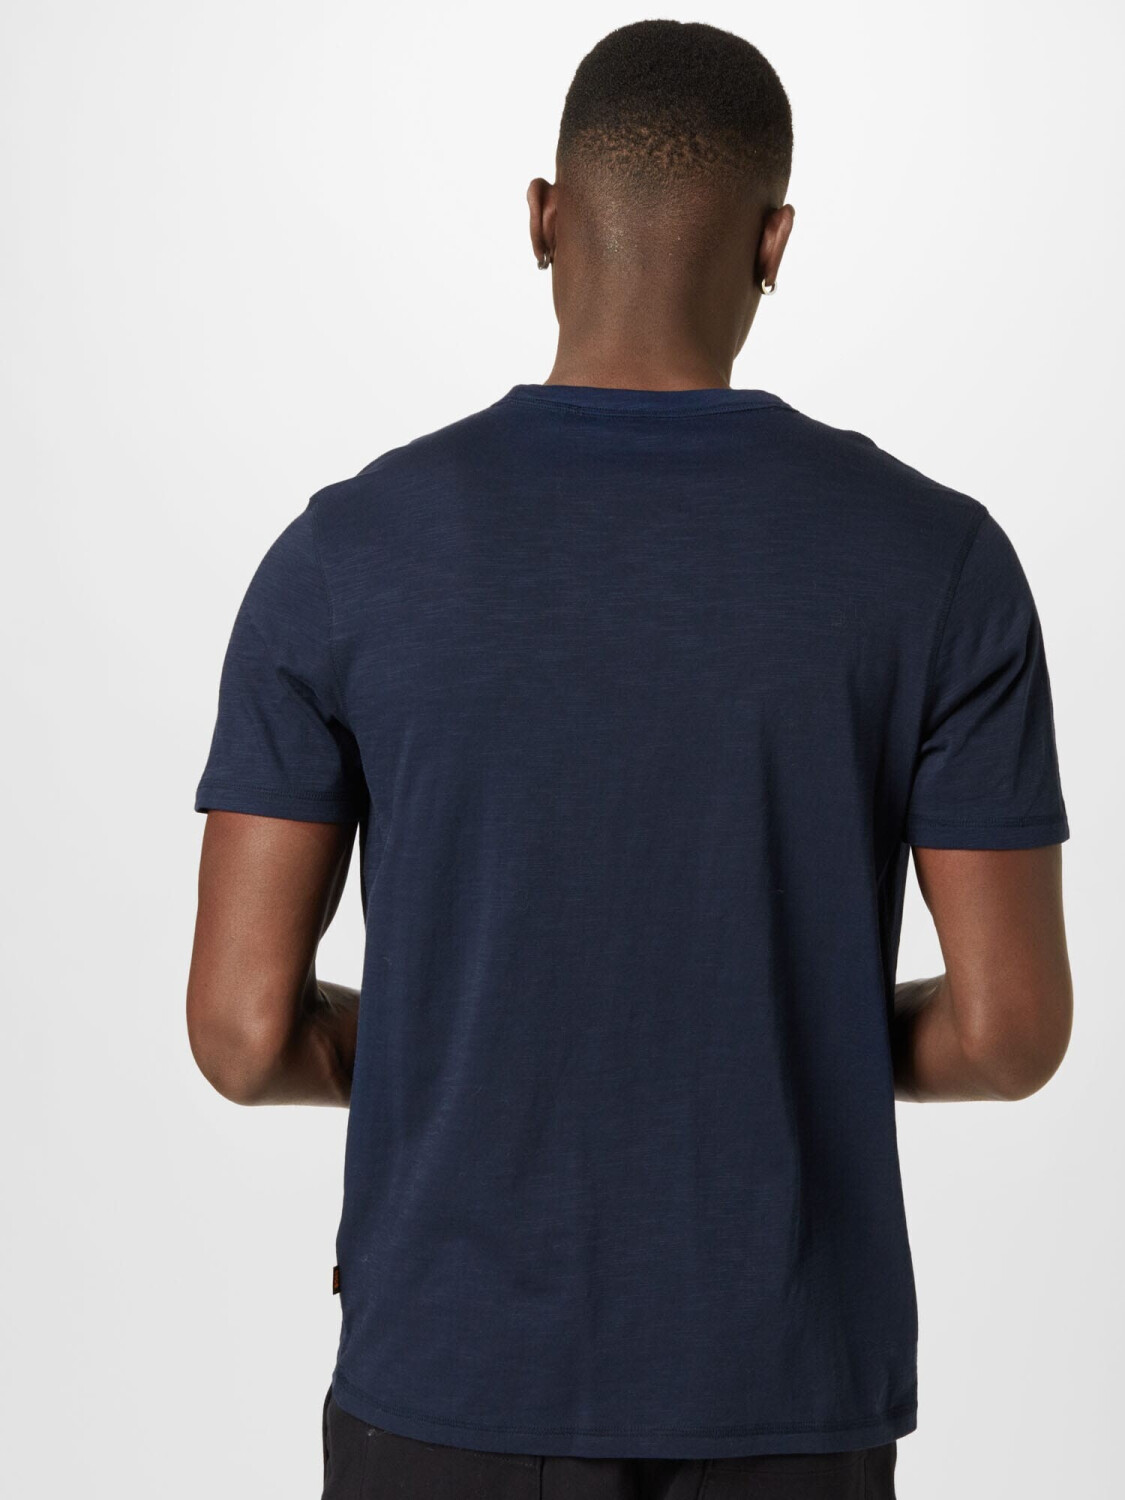 Hugo Boss Short Sleeve T-Shirt (50478771-404) blau ab 29,99 € |  Preisvergleich bei